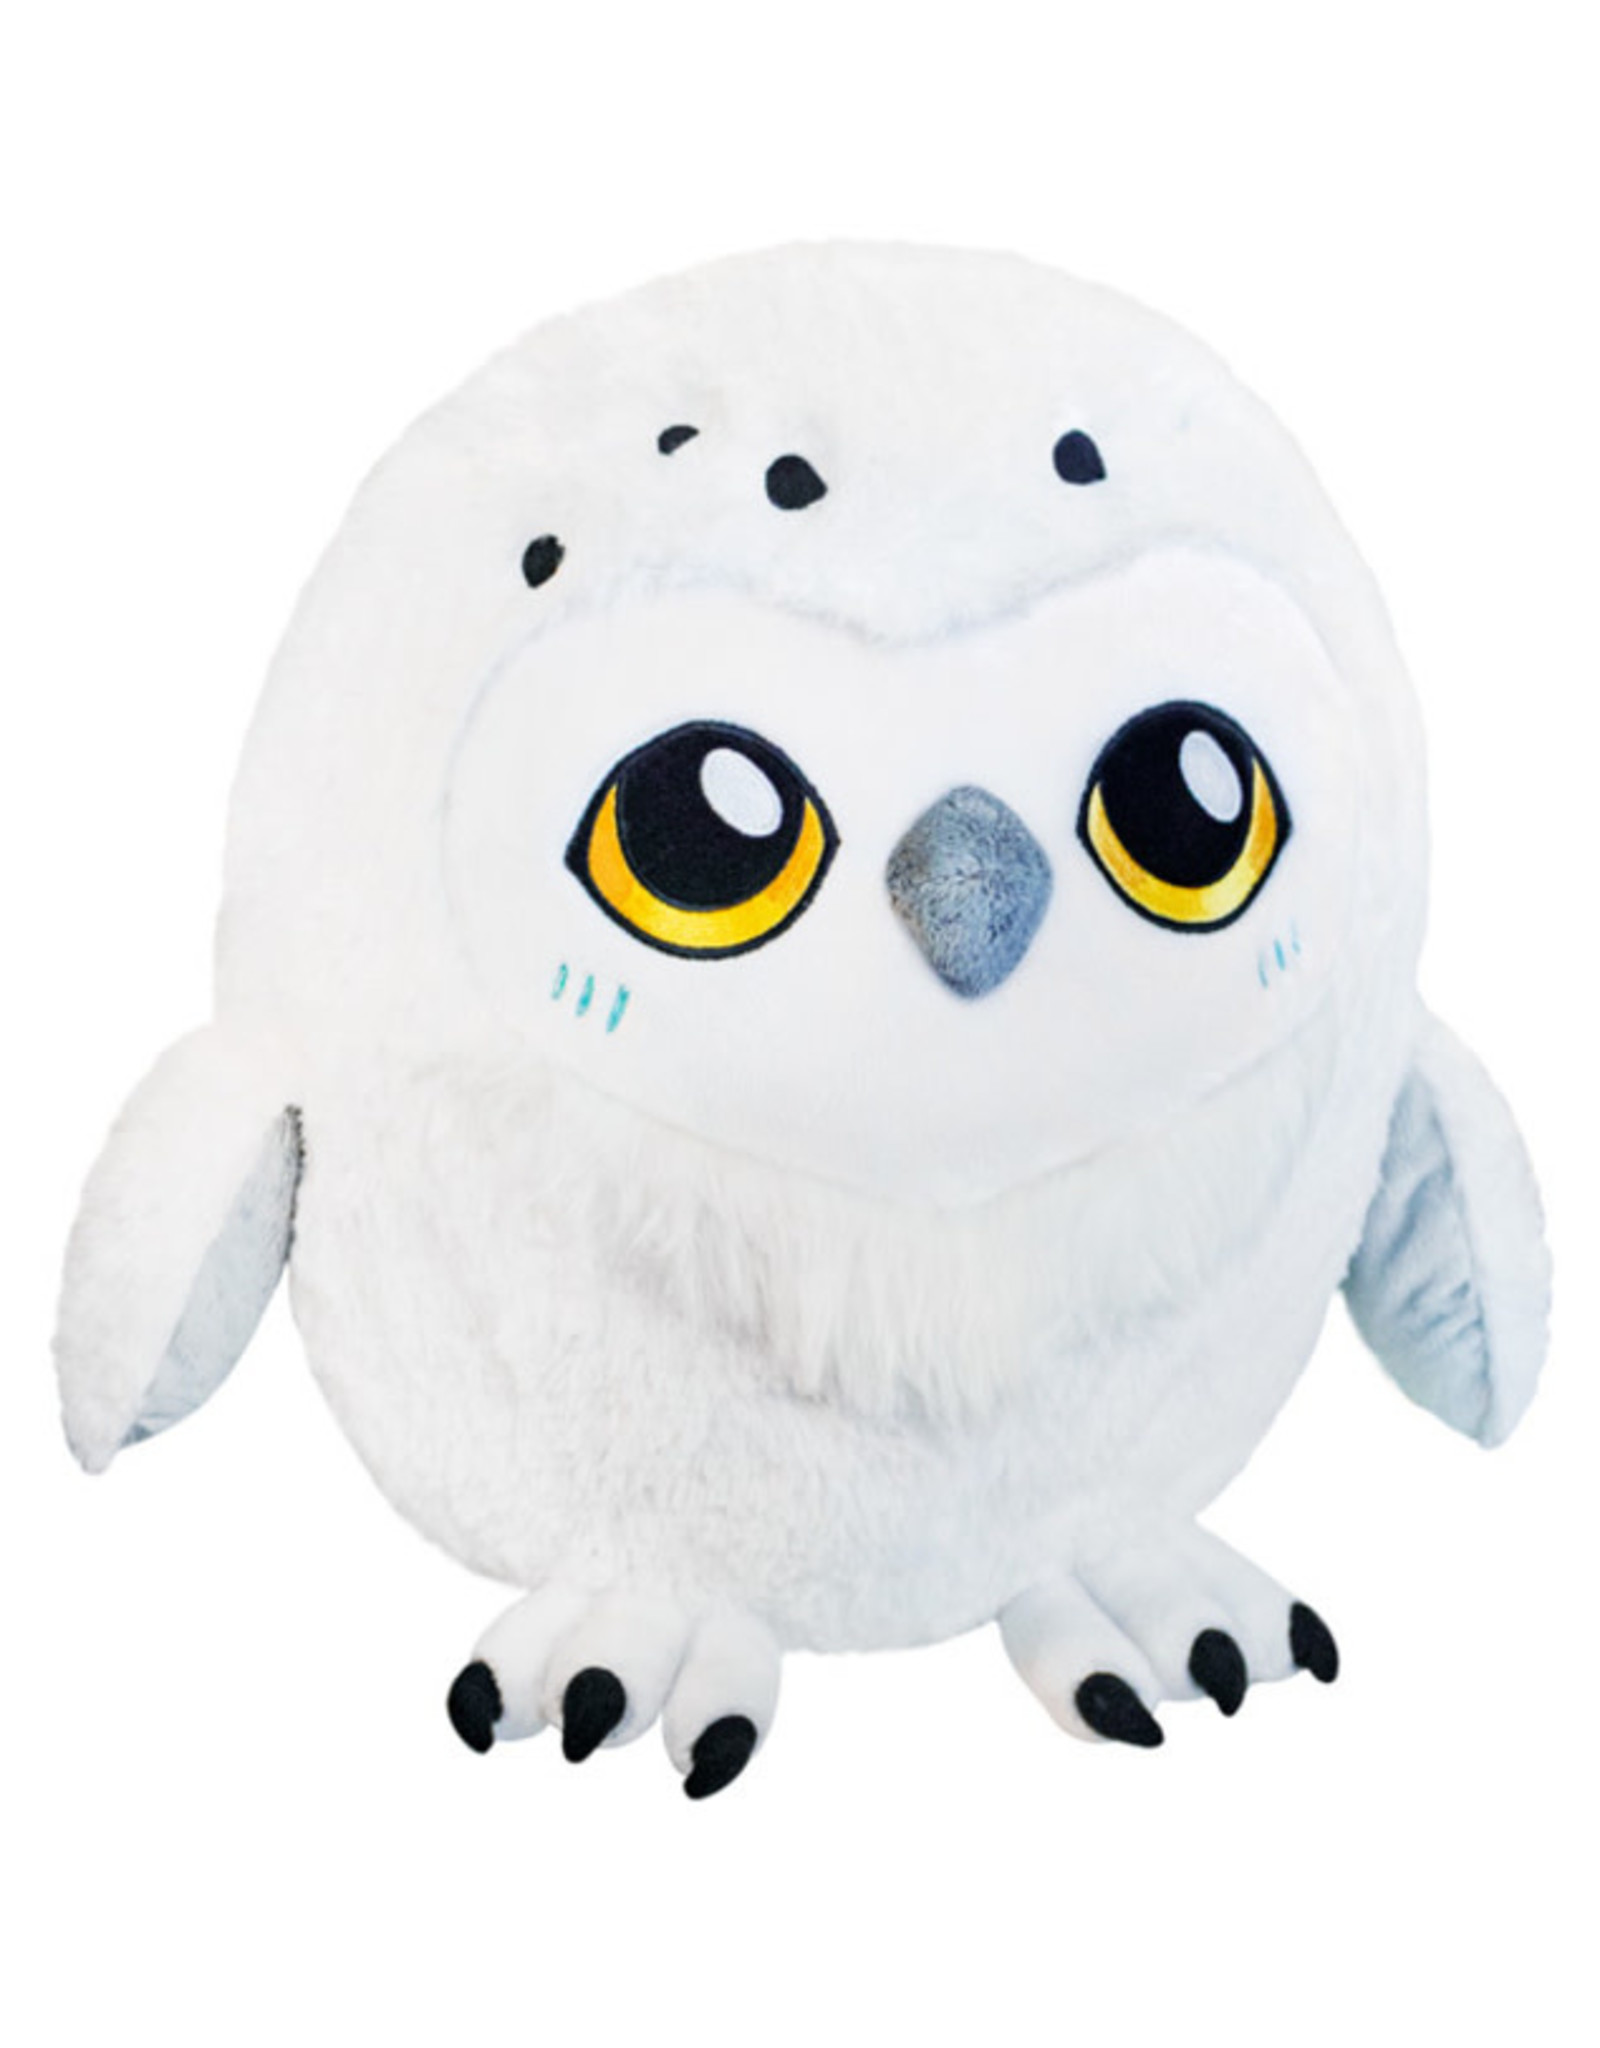 Squishable Squishable Snowy Owl